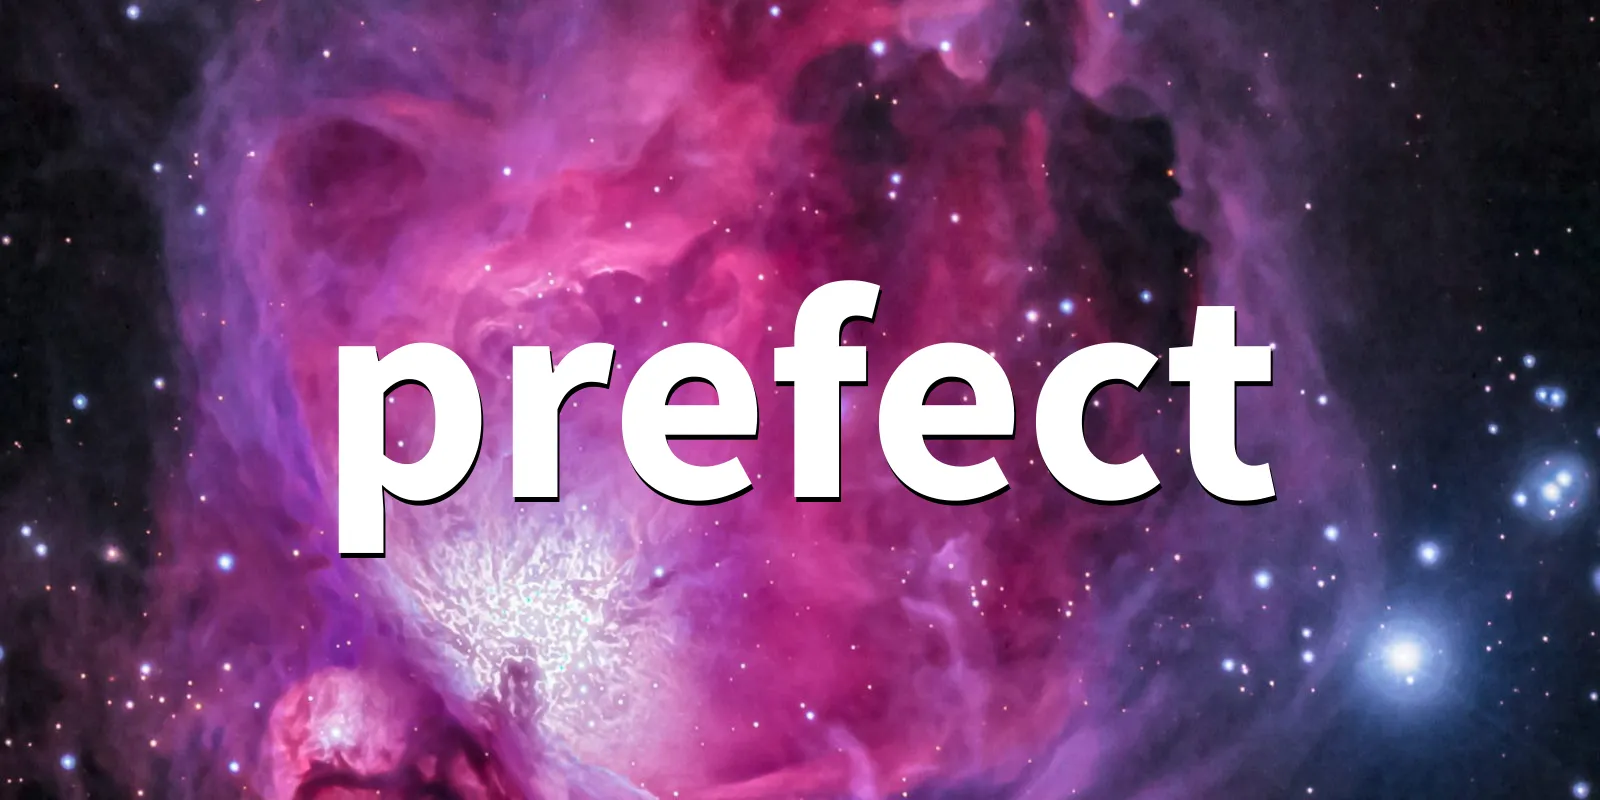 /pkg/p/prefect/prefect-banner.webp